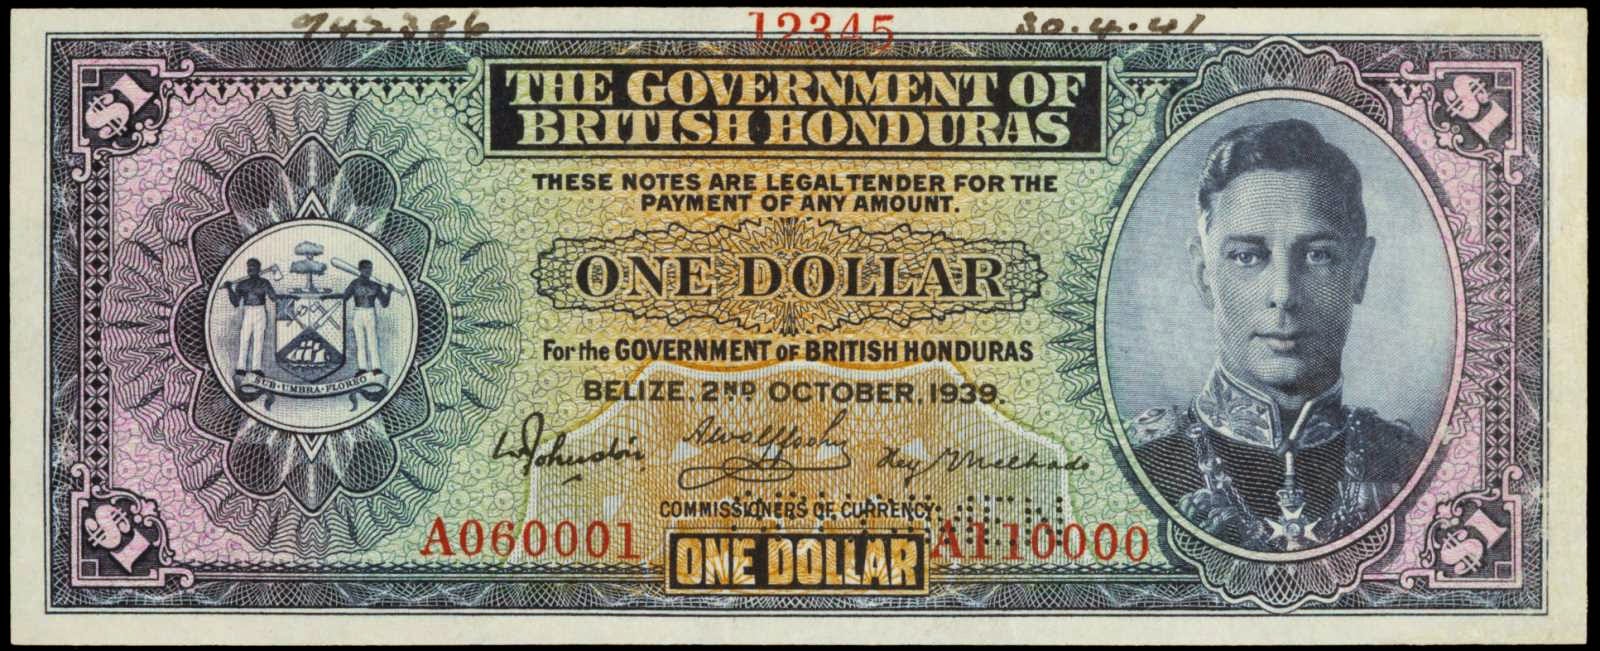 British Honduras Notes One Dollar banknote 1939 King George VI